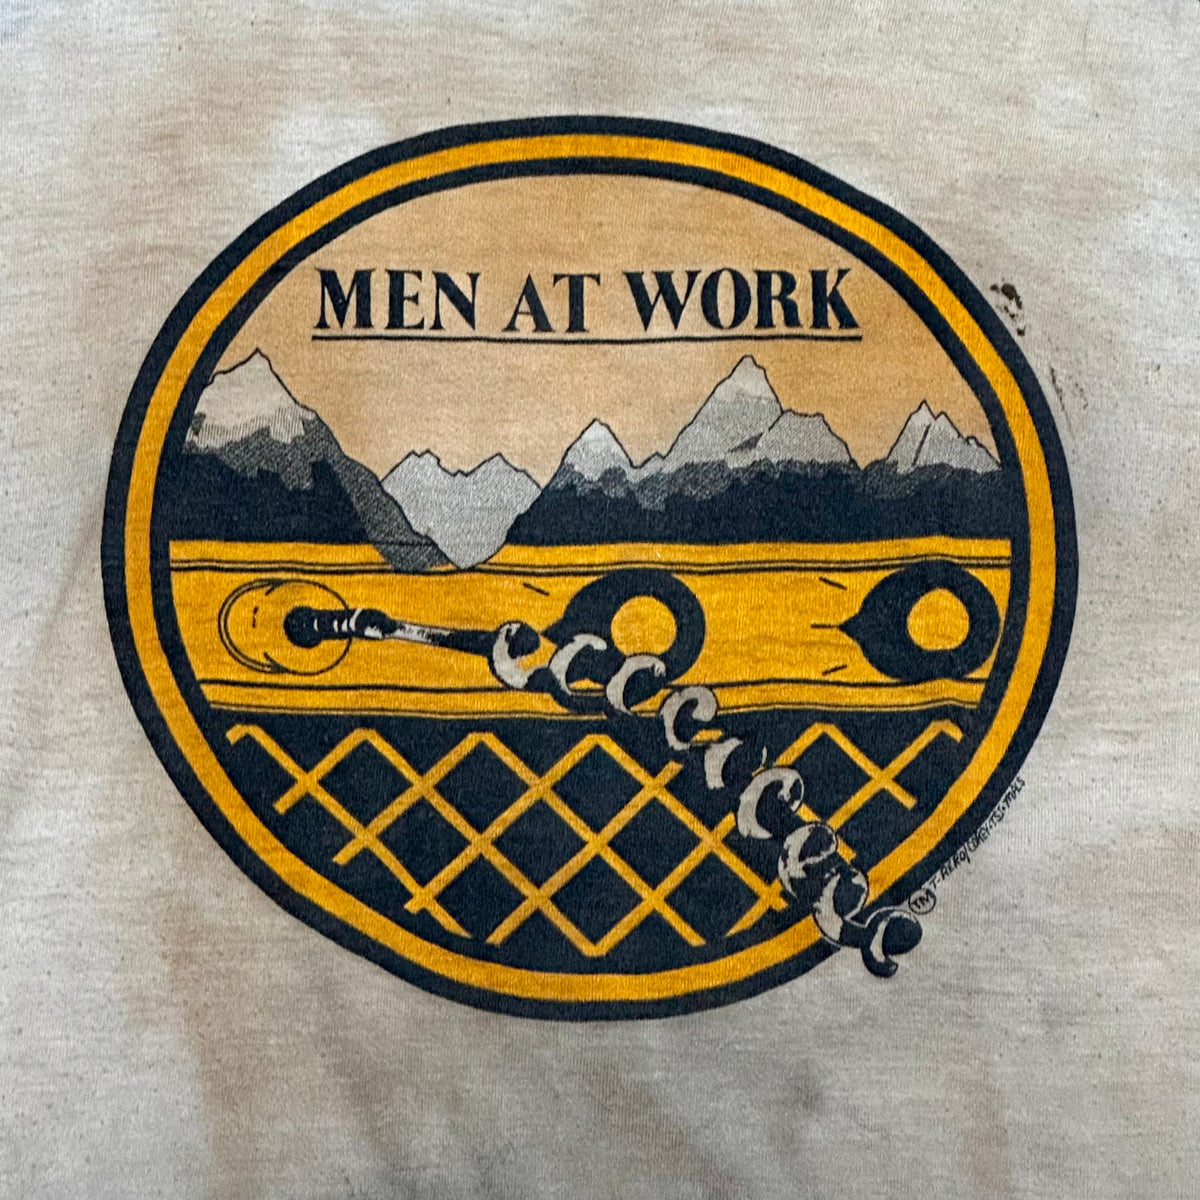 Vintage 1980s Men at work 1983 “Business as usual” raglan tshirt